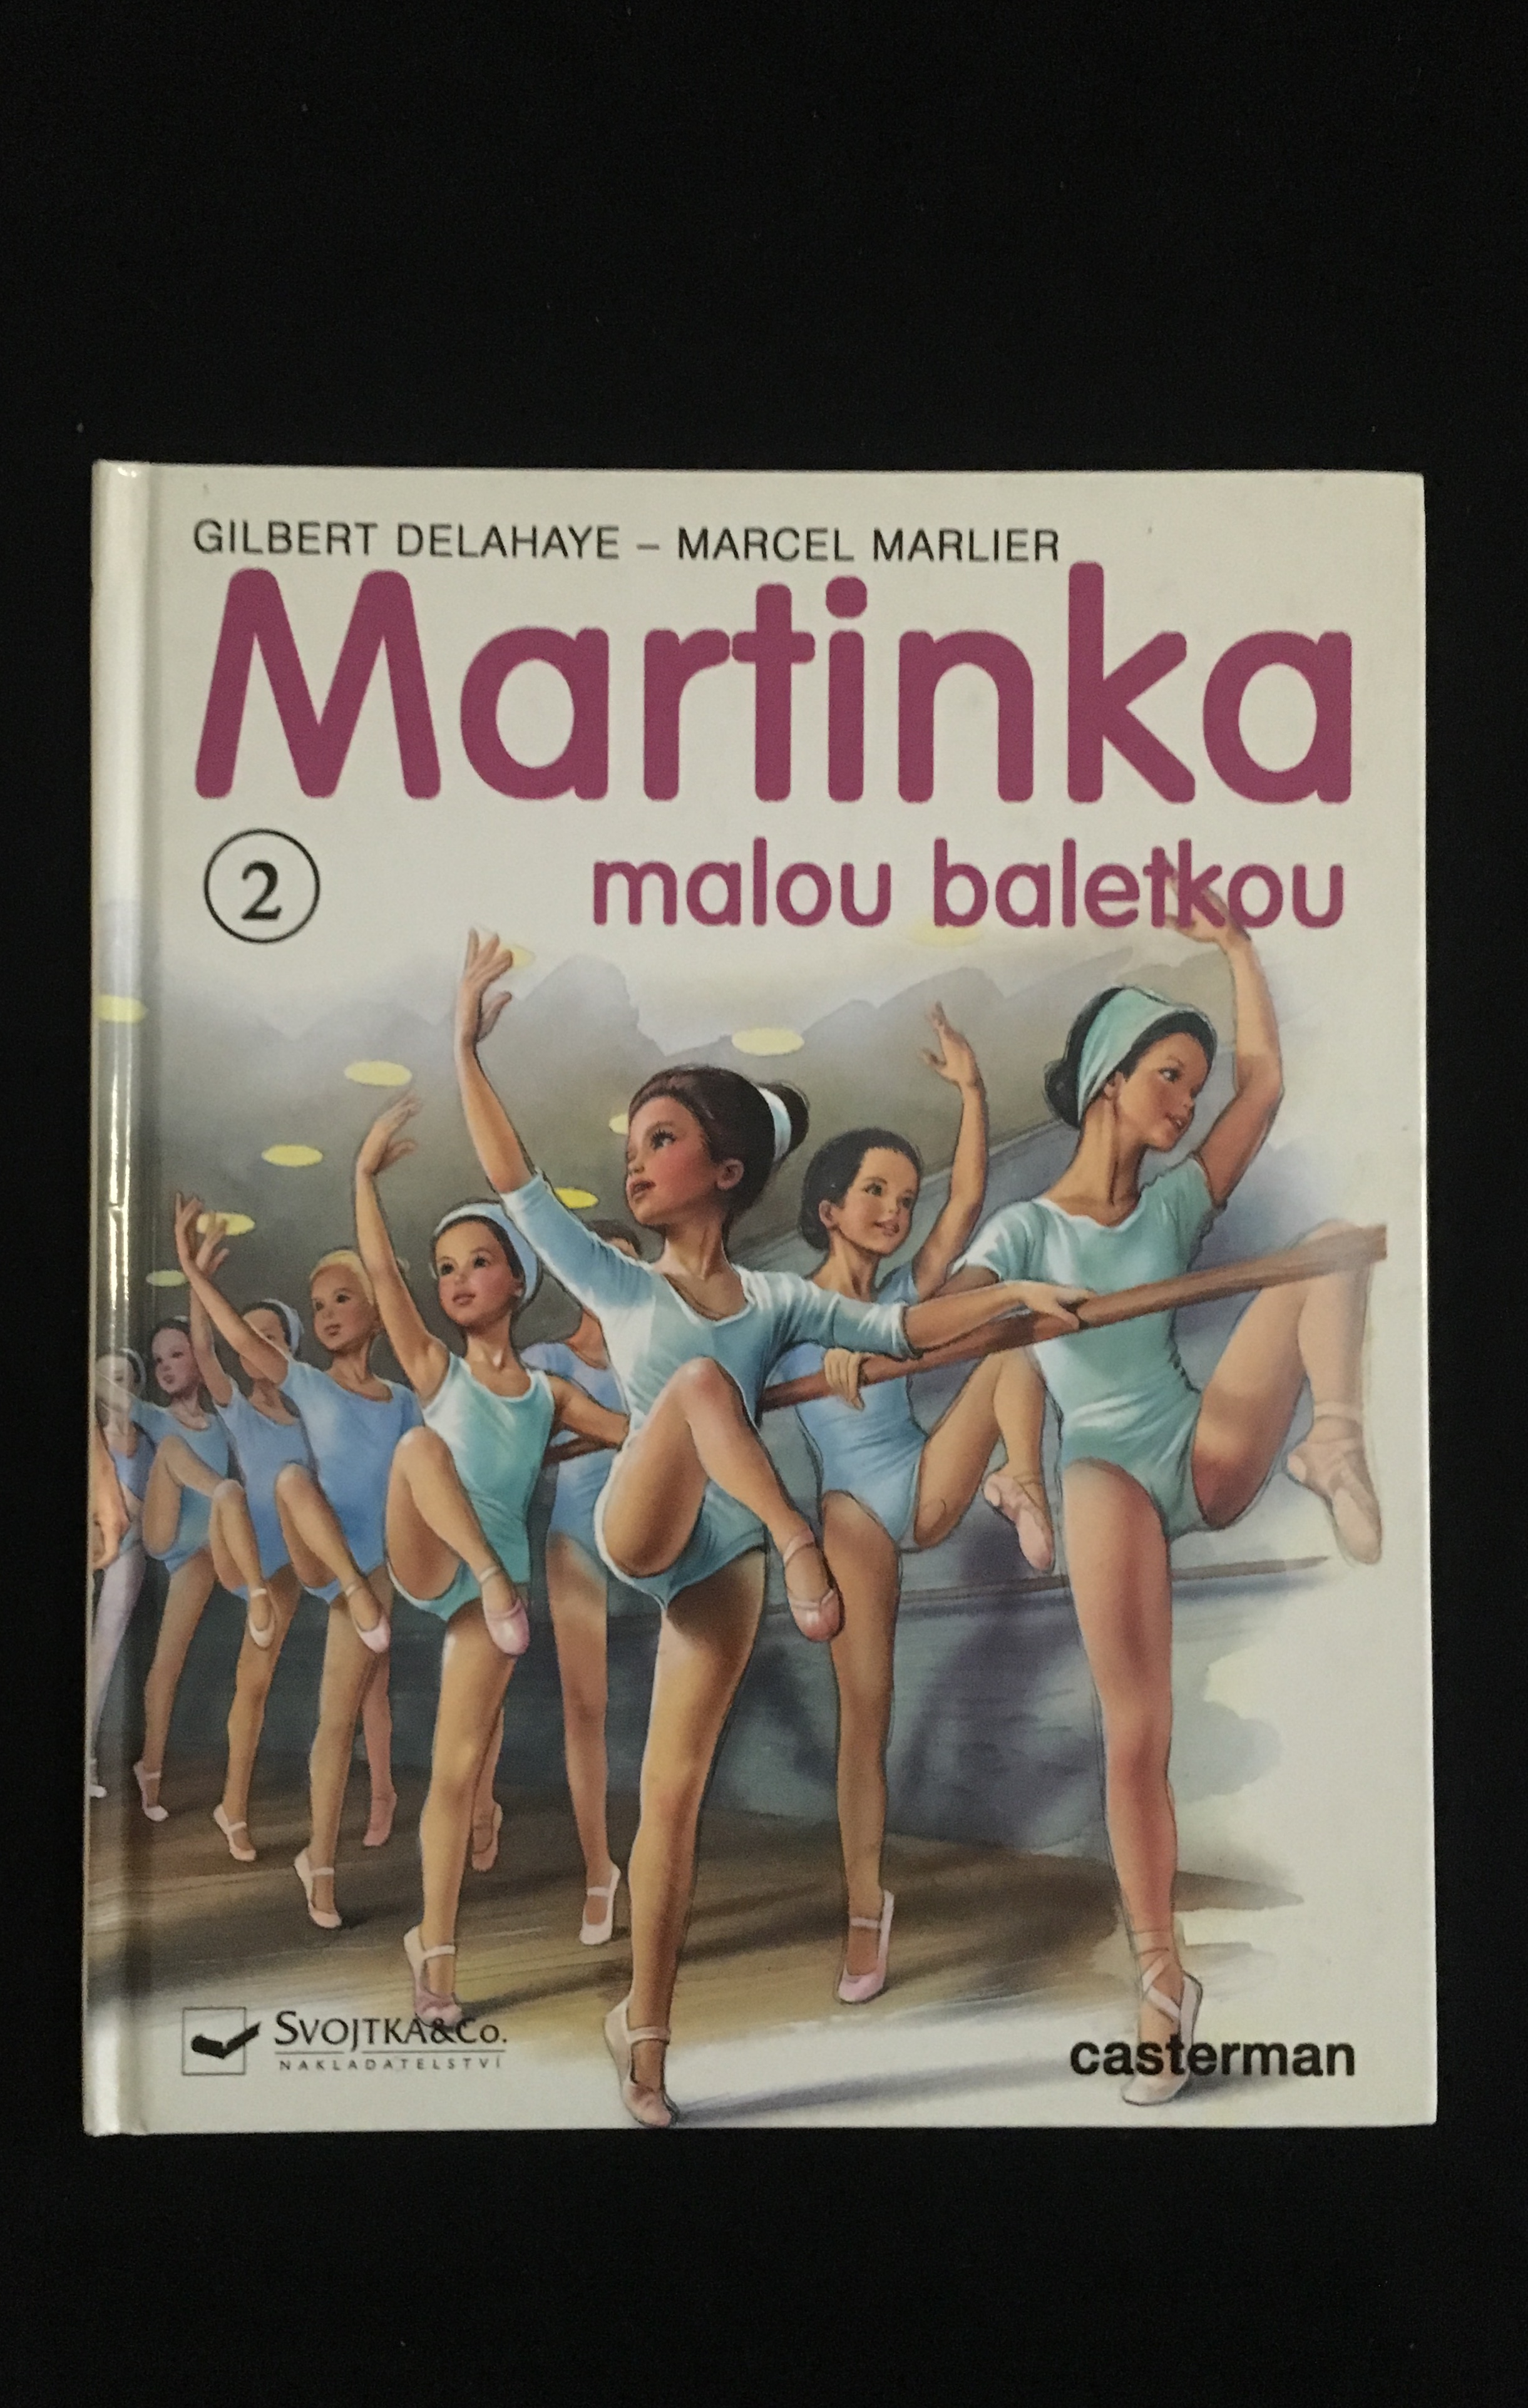 Martinka malou baletkou (cz)